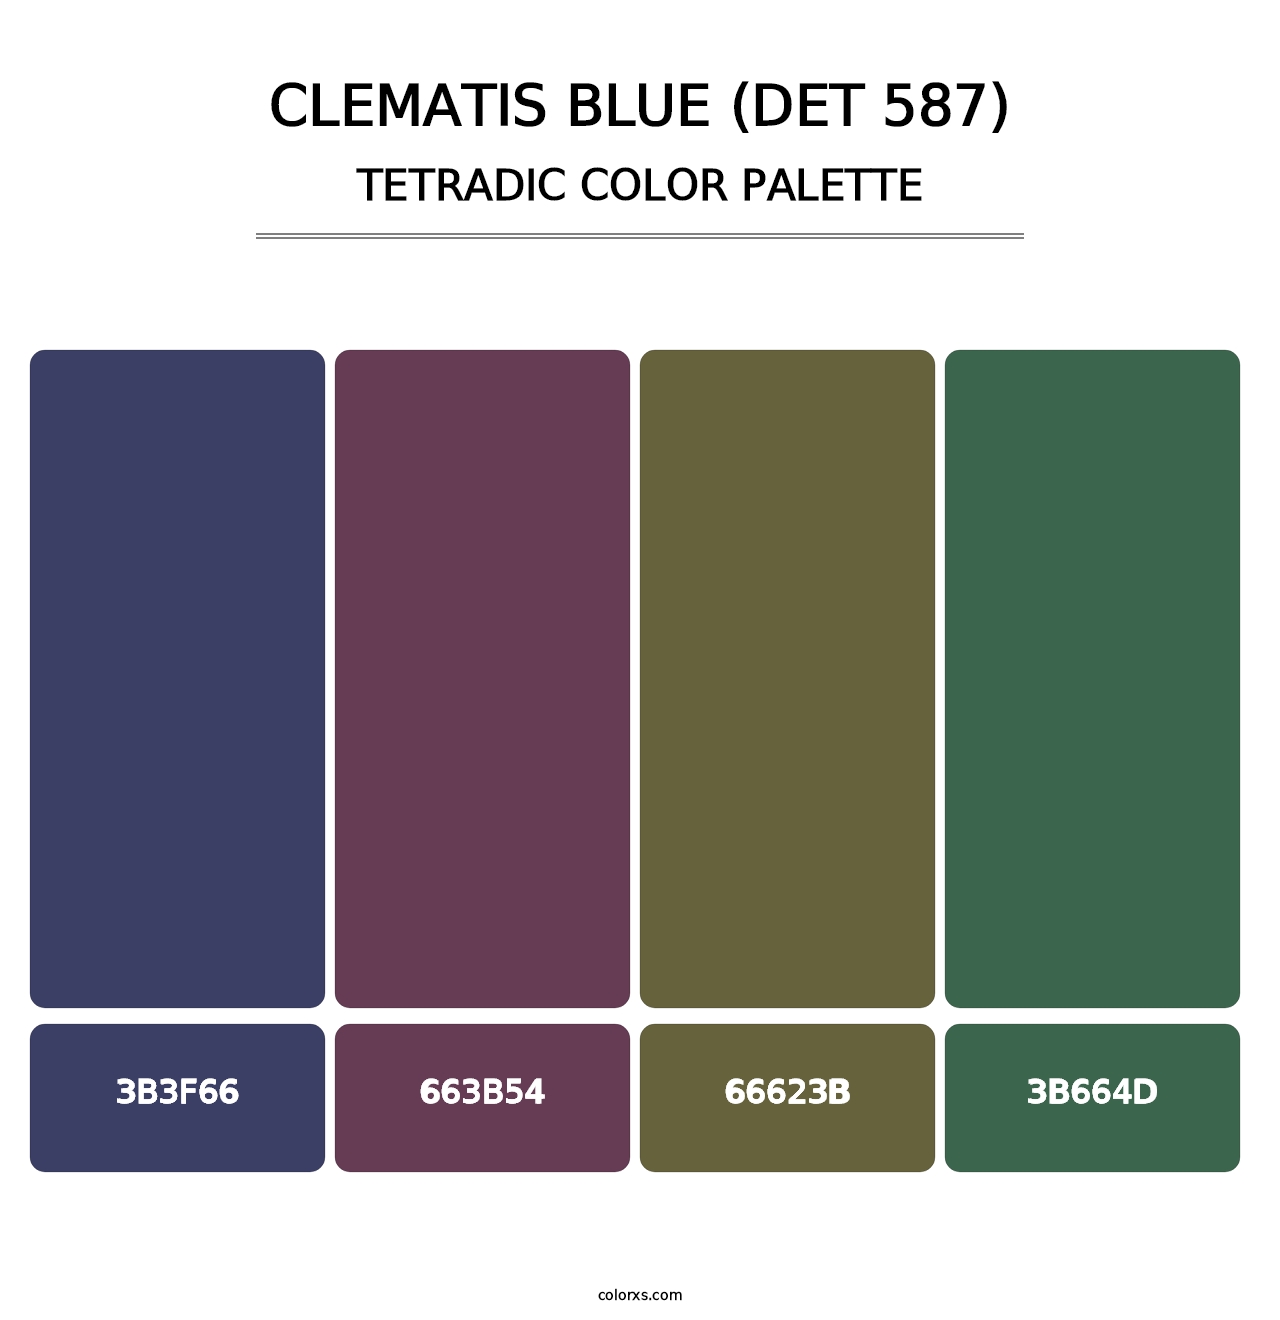 Clematis Blue (DET 587) - Tetradic Color Palette